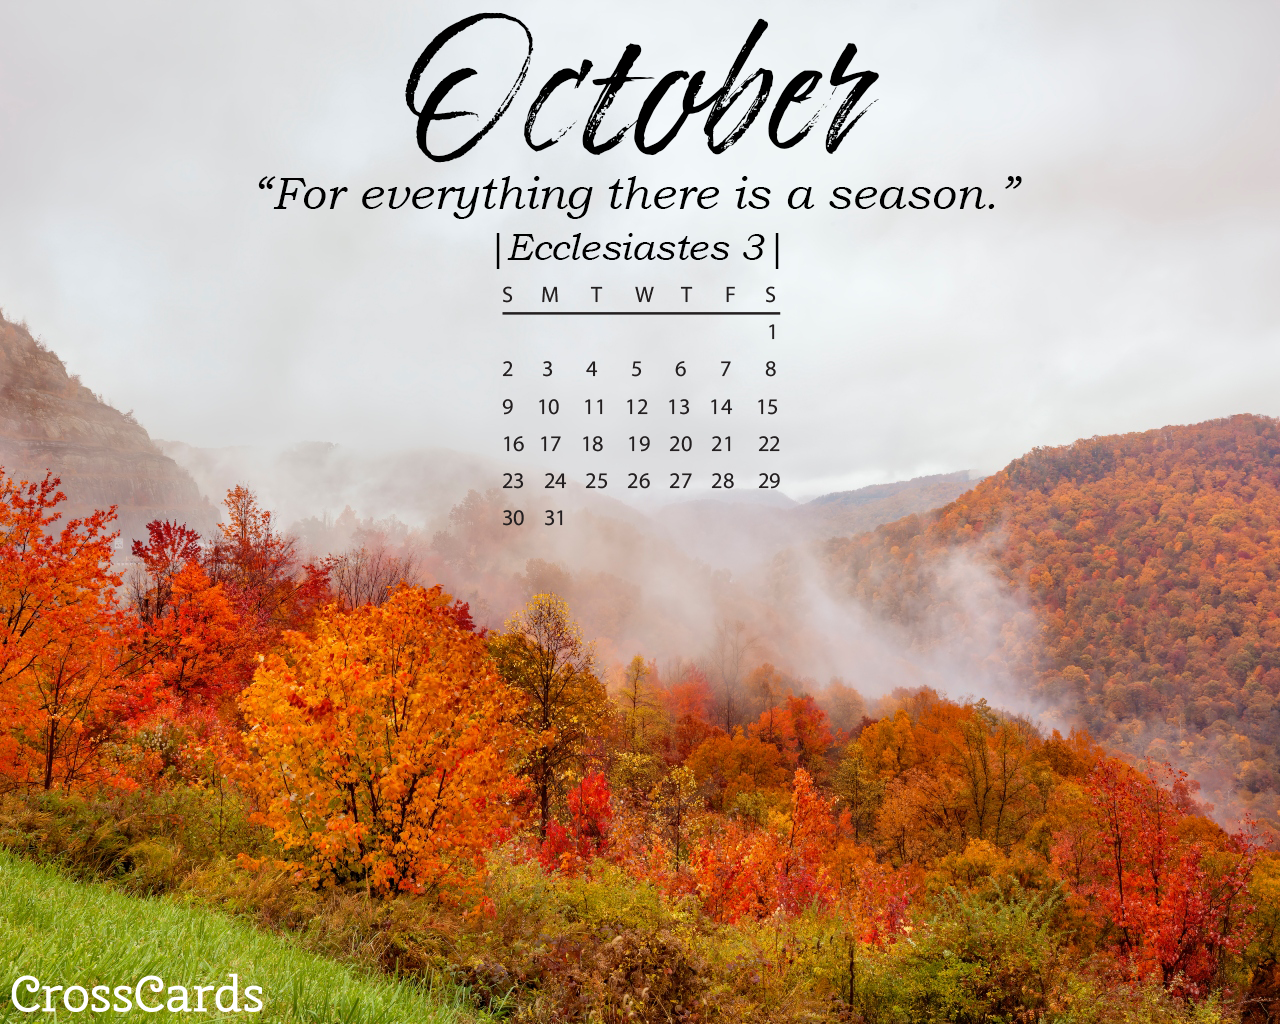 October 2021 wallpapers  35 FREE calendars for desktop and phones